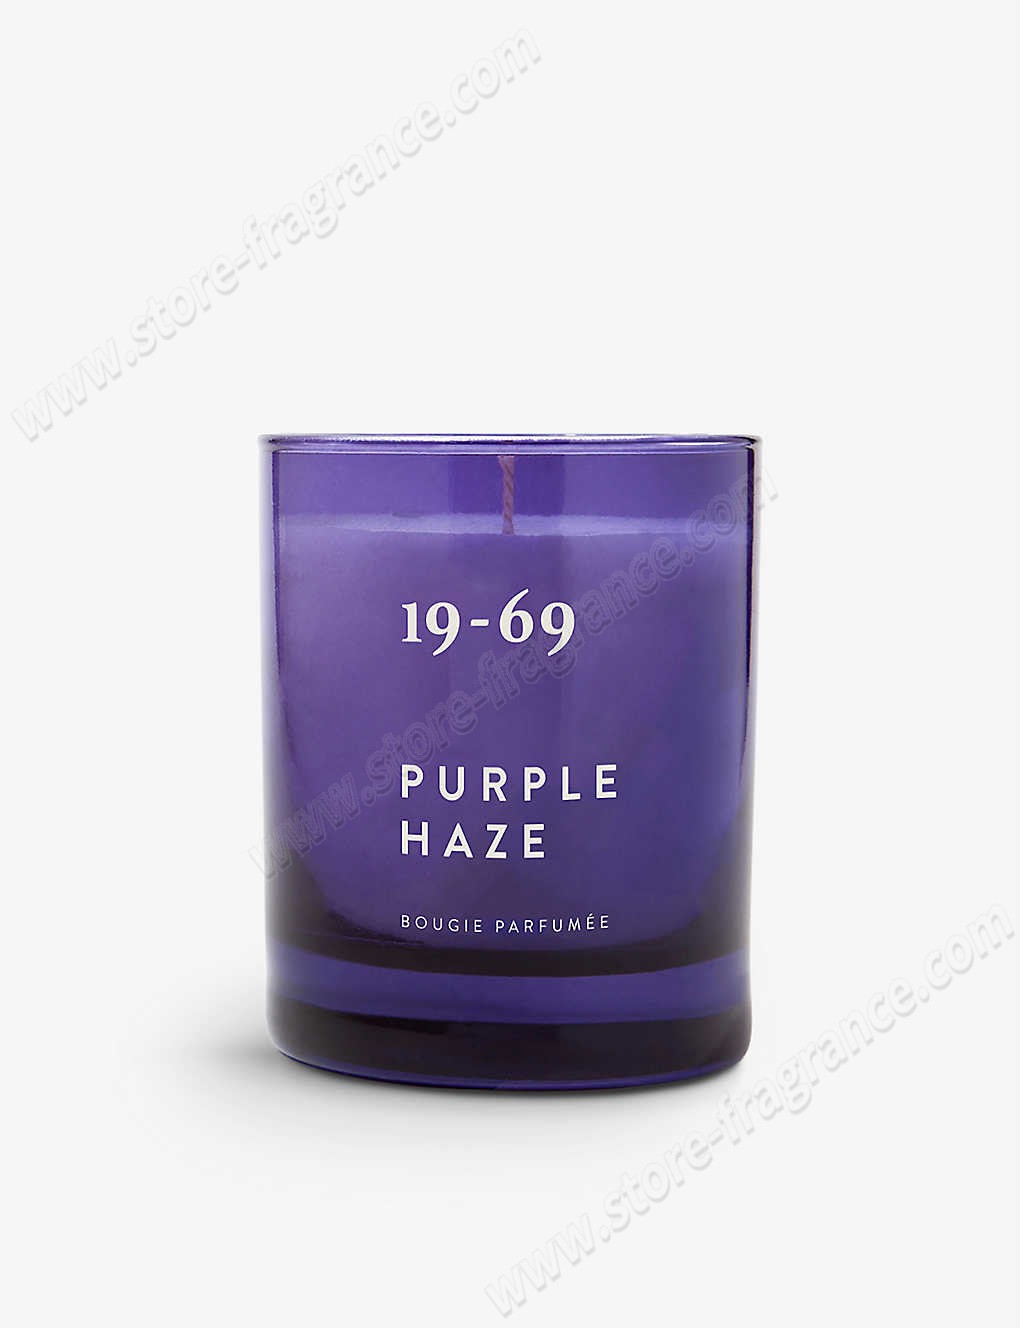 19-69/Purple Haze vegetable-wax scented candle 200ml ✿ Discount Store - 19-69/Purple Haze vegetable-wax scented candle 200ml ✿ Discount Store